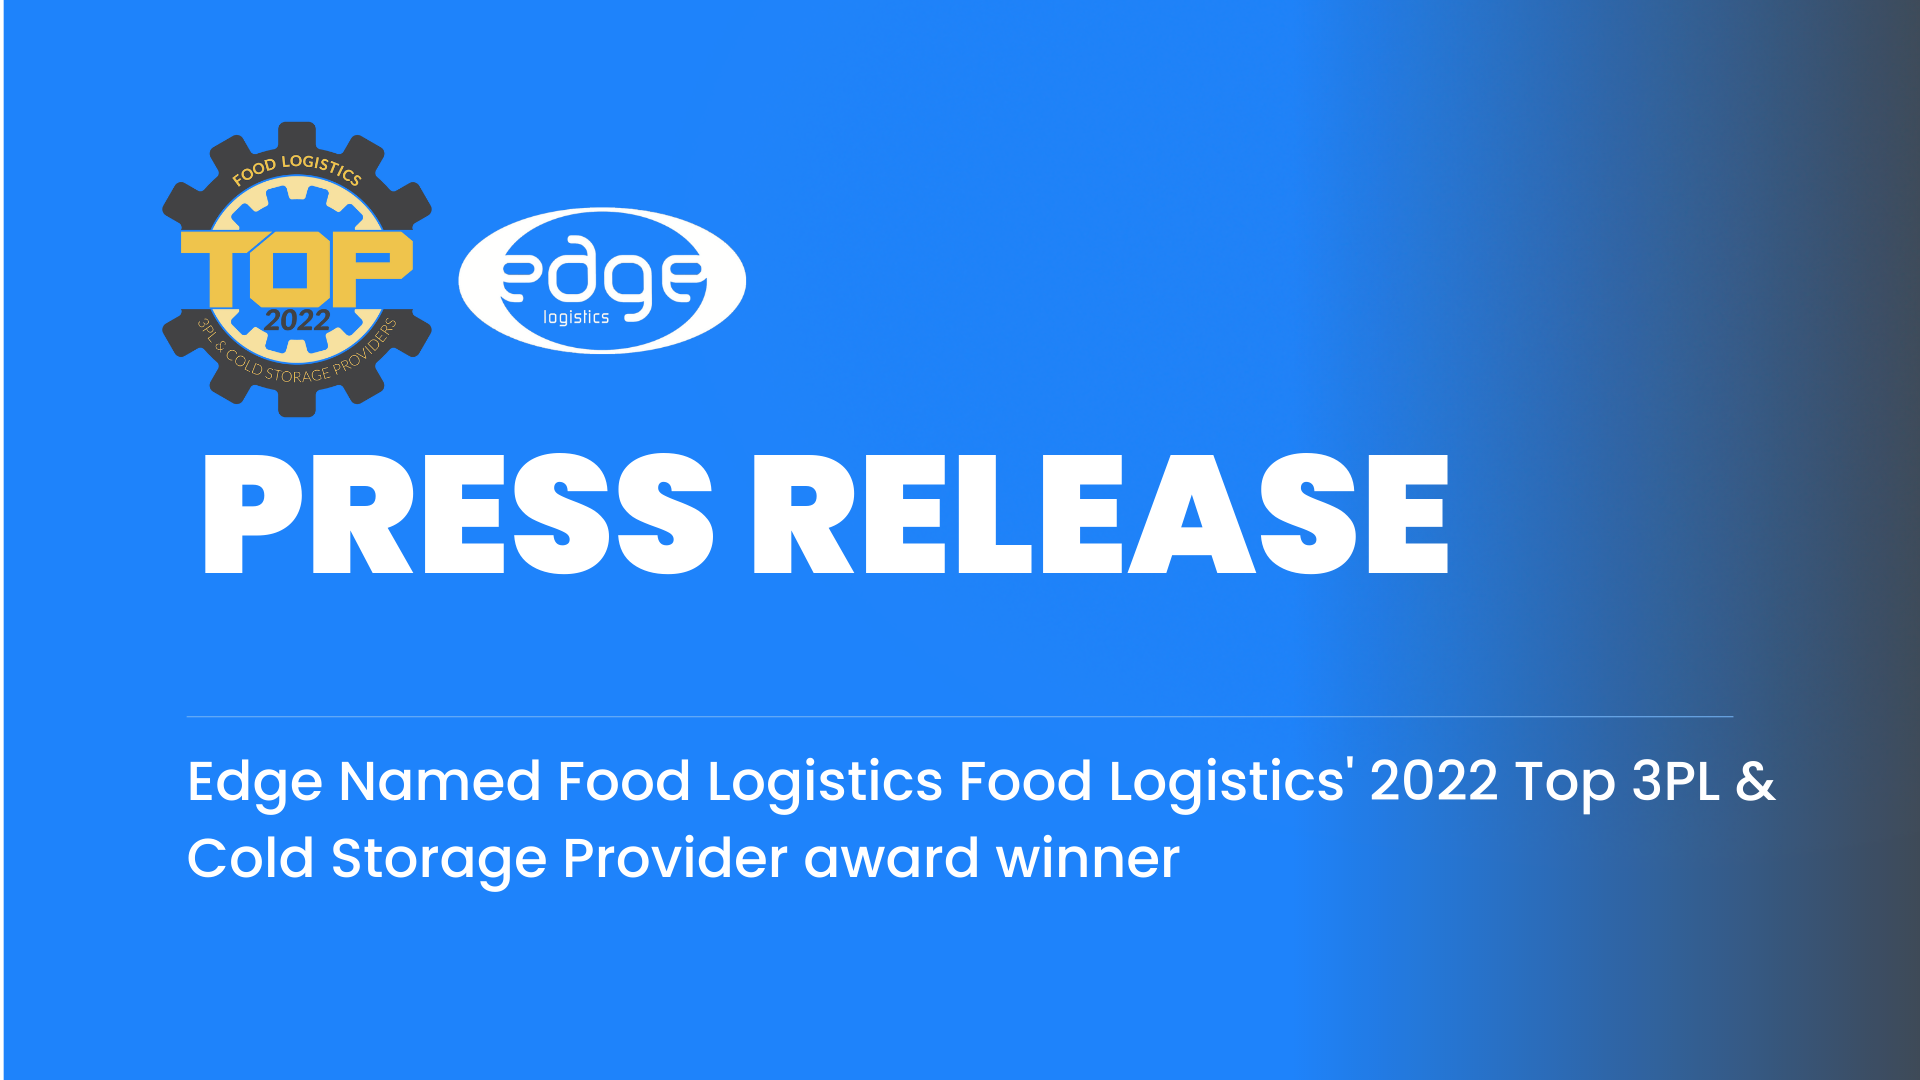 Edge Named  Food Logistics' 2022 Top 3PL & Cold Storage Provider Award Winner